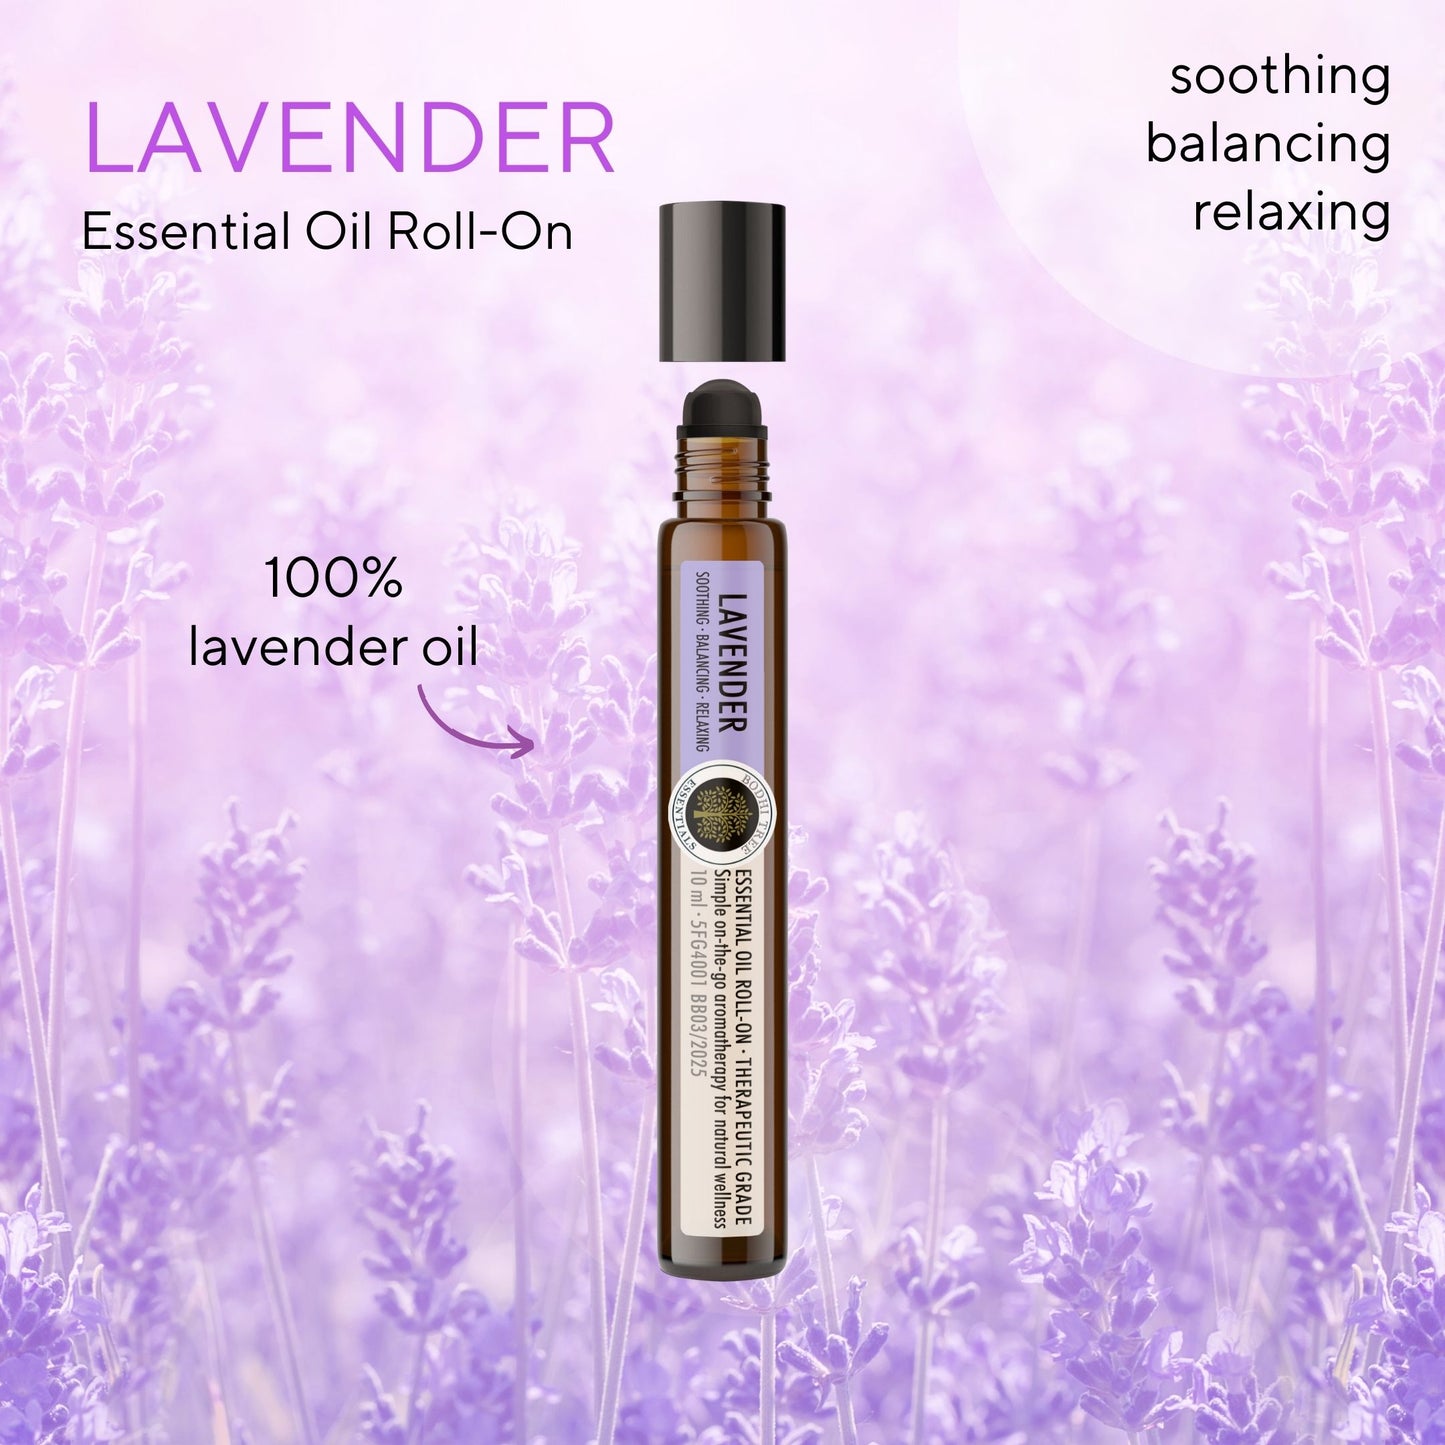 Bodhi Tree Essential Oil Roll-On Lavender